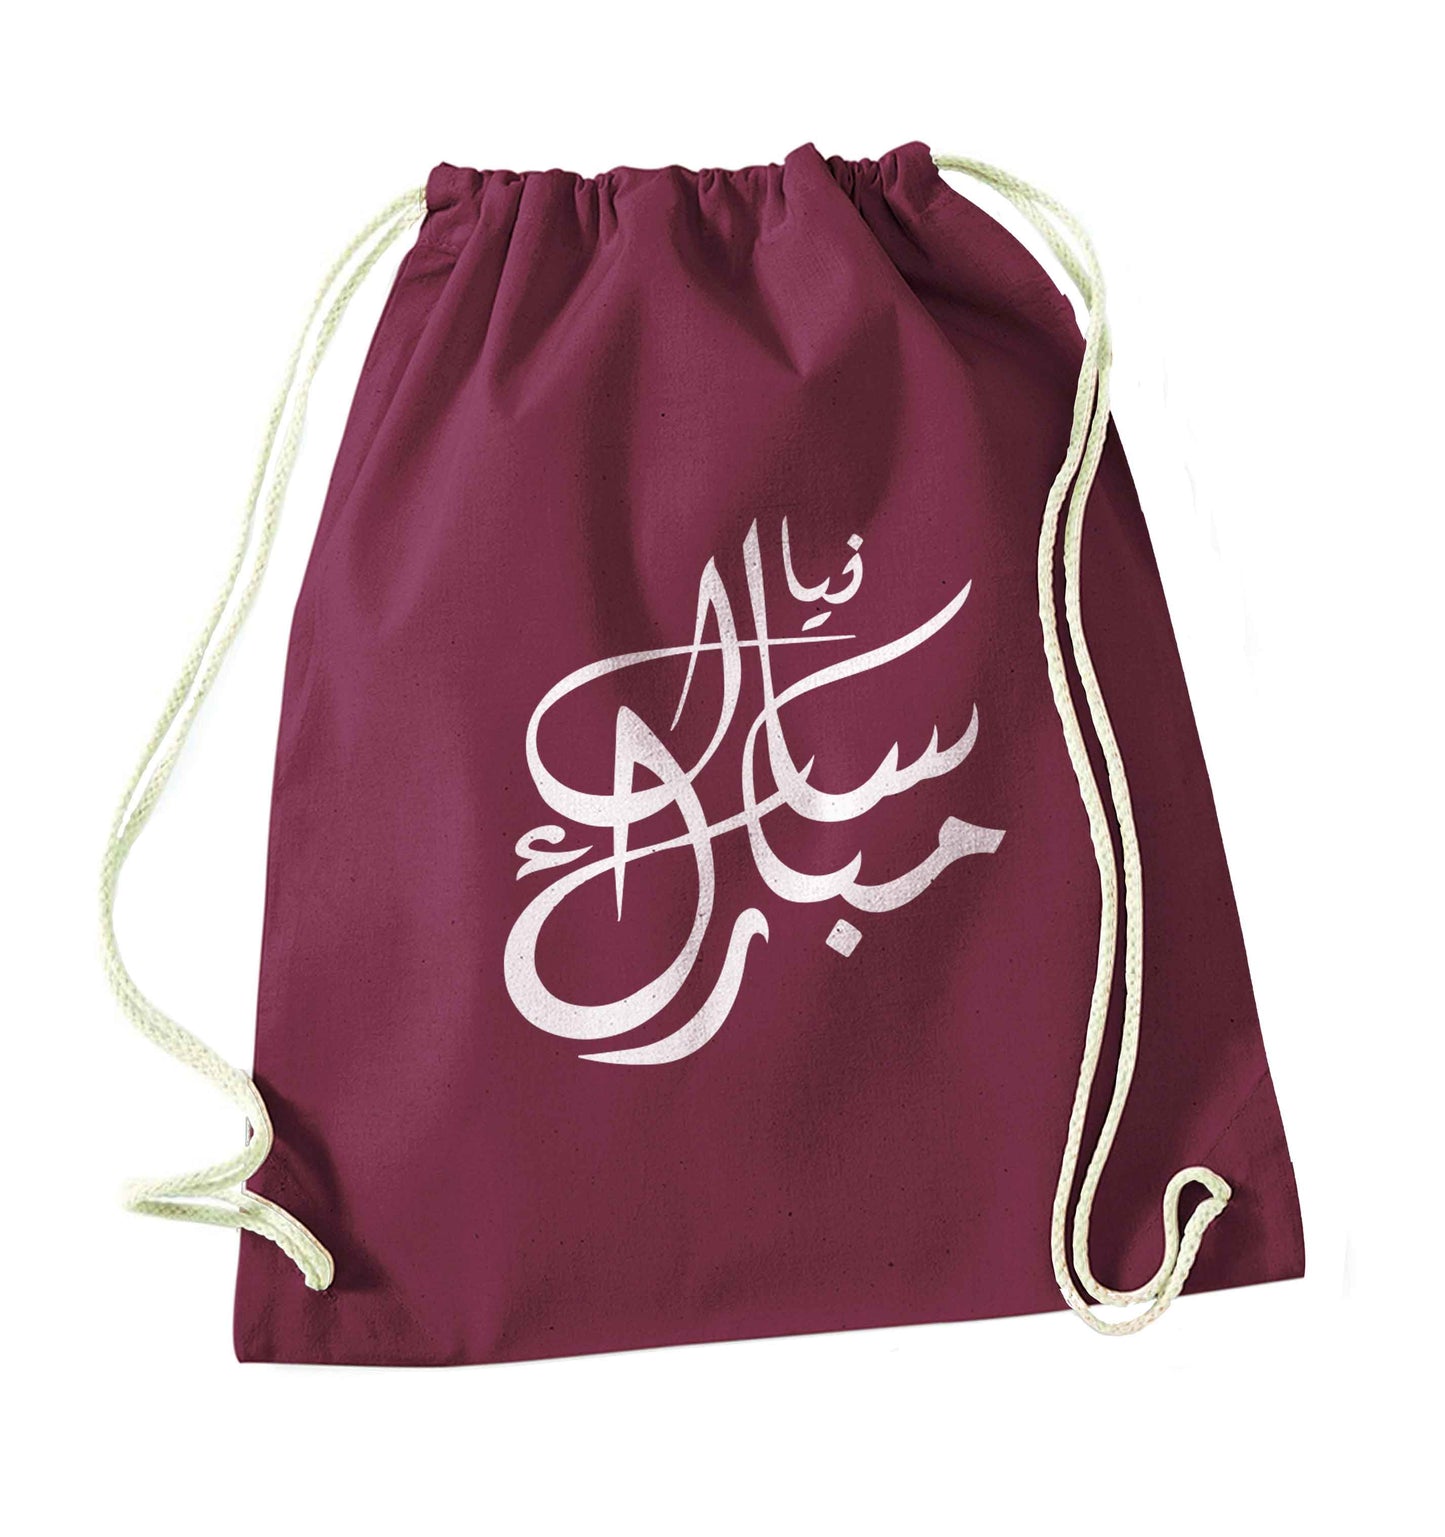 Urdu Naya saal mubarak maroon drawstring bag